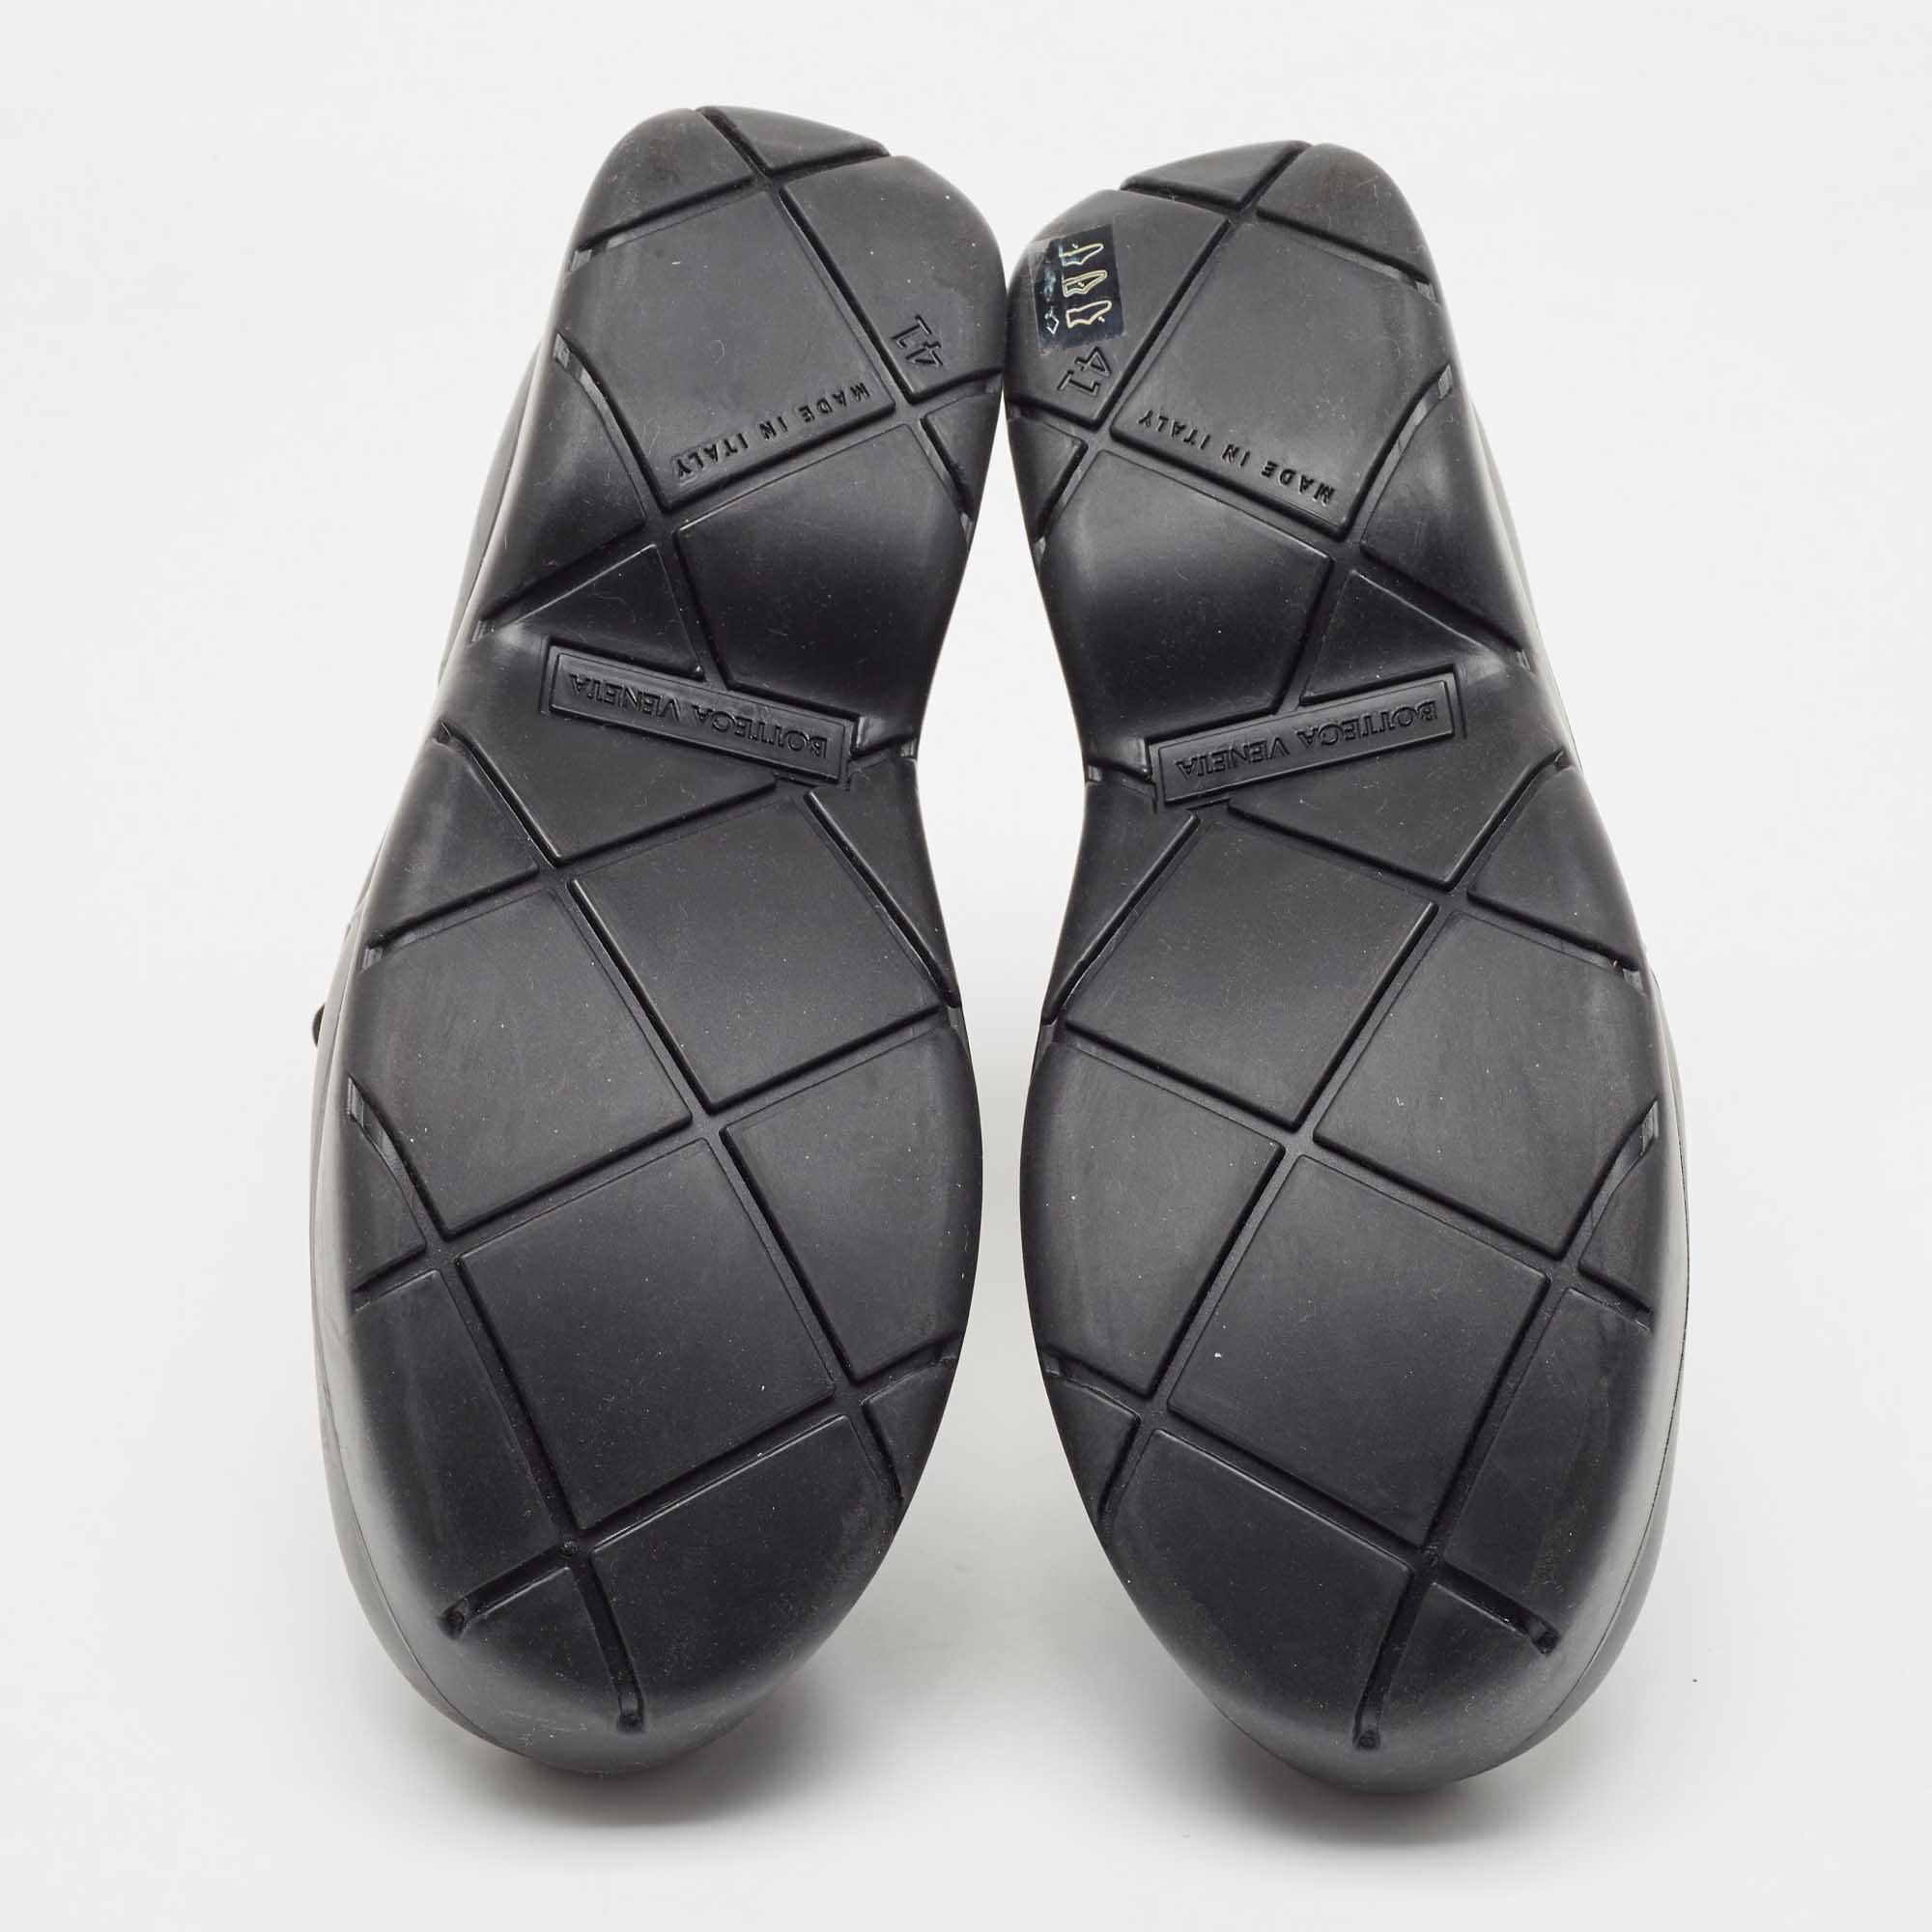 Bottega Veneta Black Rubber Lace Up Puddle Boots Size 41